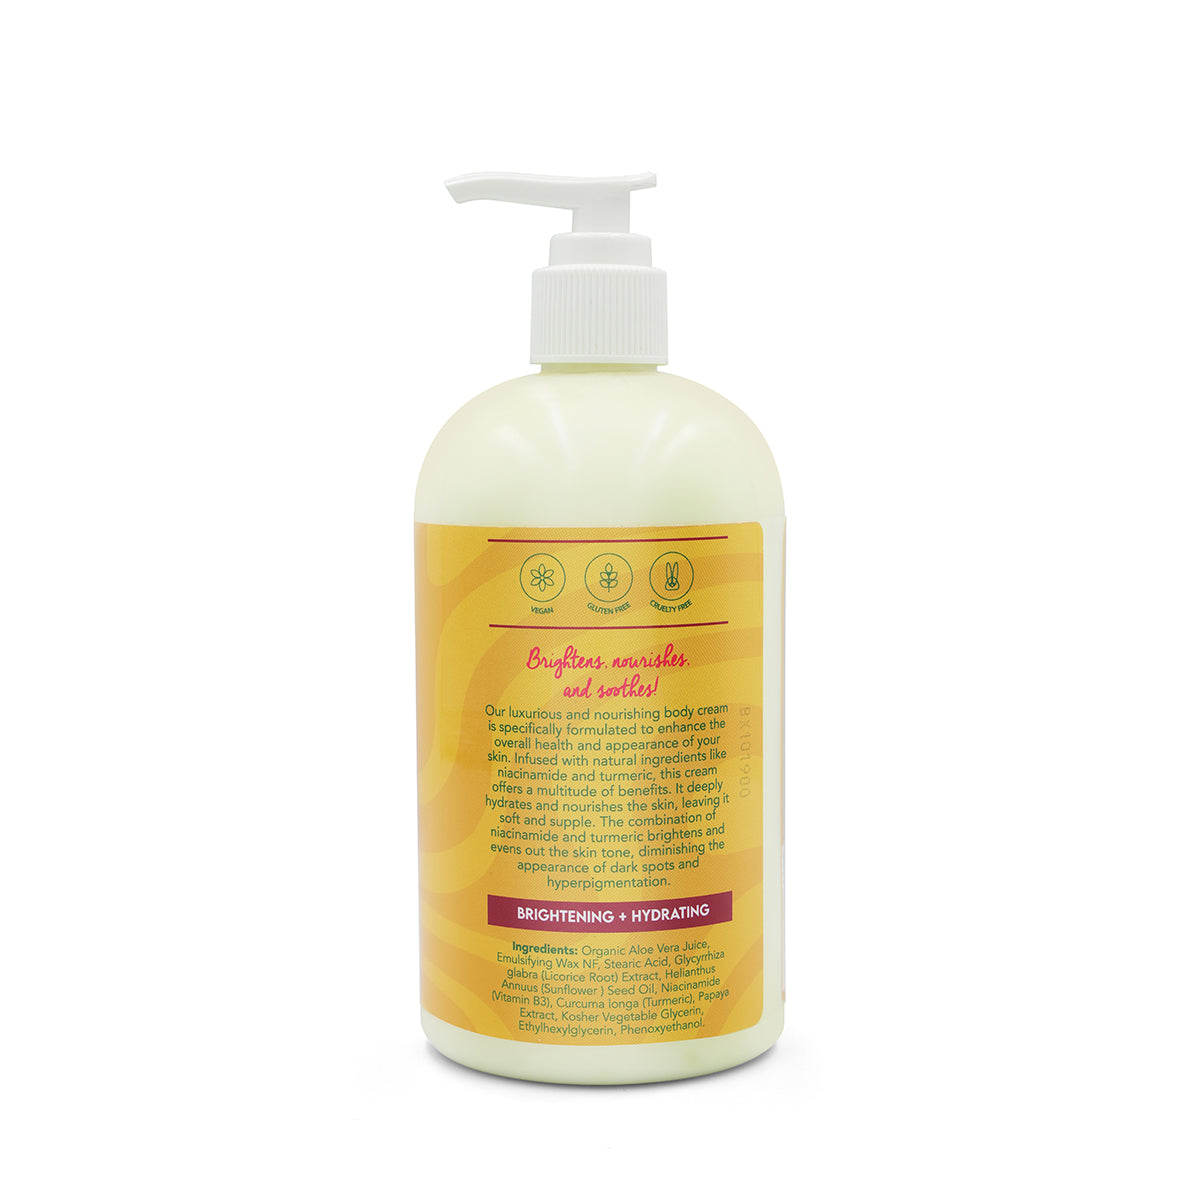 Organic Extract Turmeric Body Cream With Papaya Extract + Niacinamide 473ml